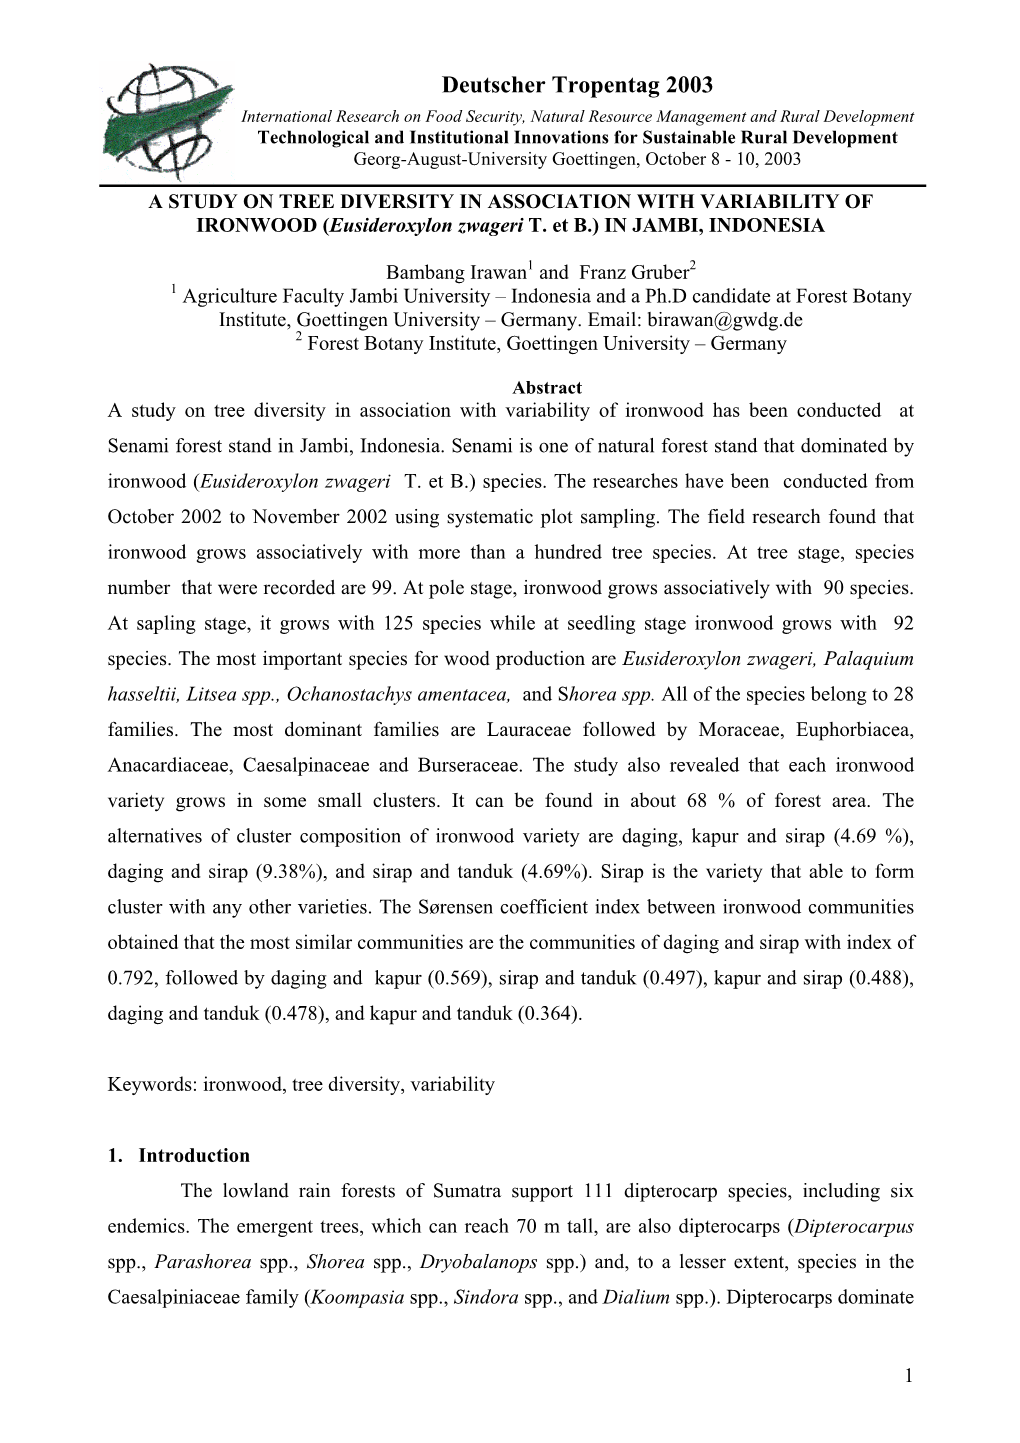 A STUDY on TREE DIVERSITY in ASSOCIATION with VARIABILITY of IRONWOOD (Eusideroxylon Zwageri T